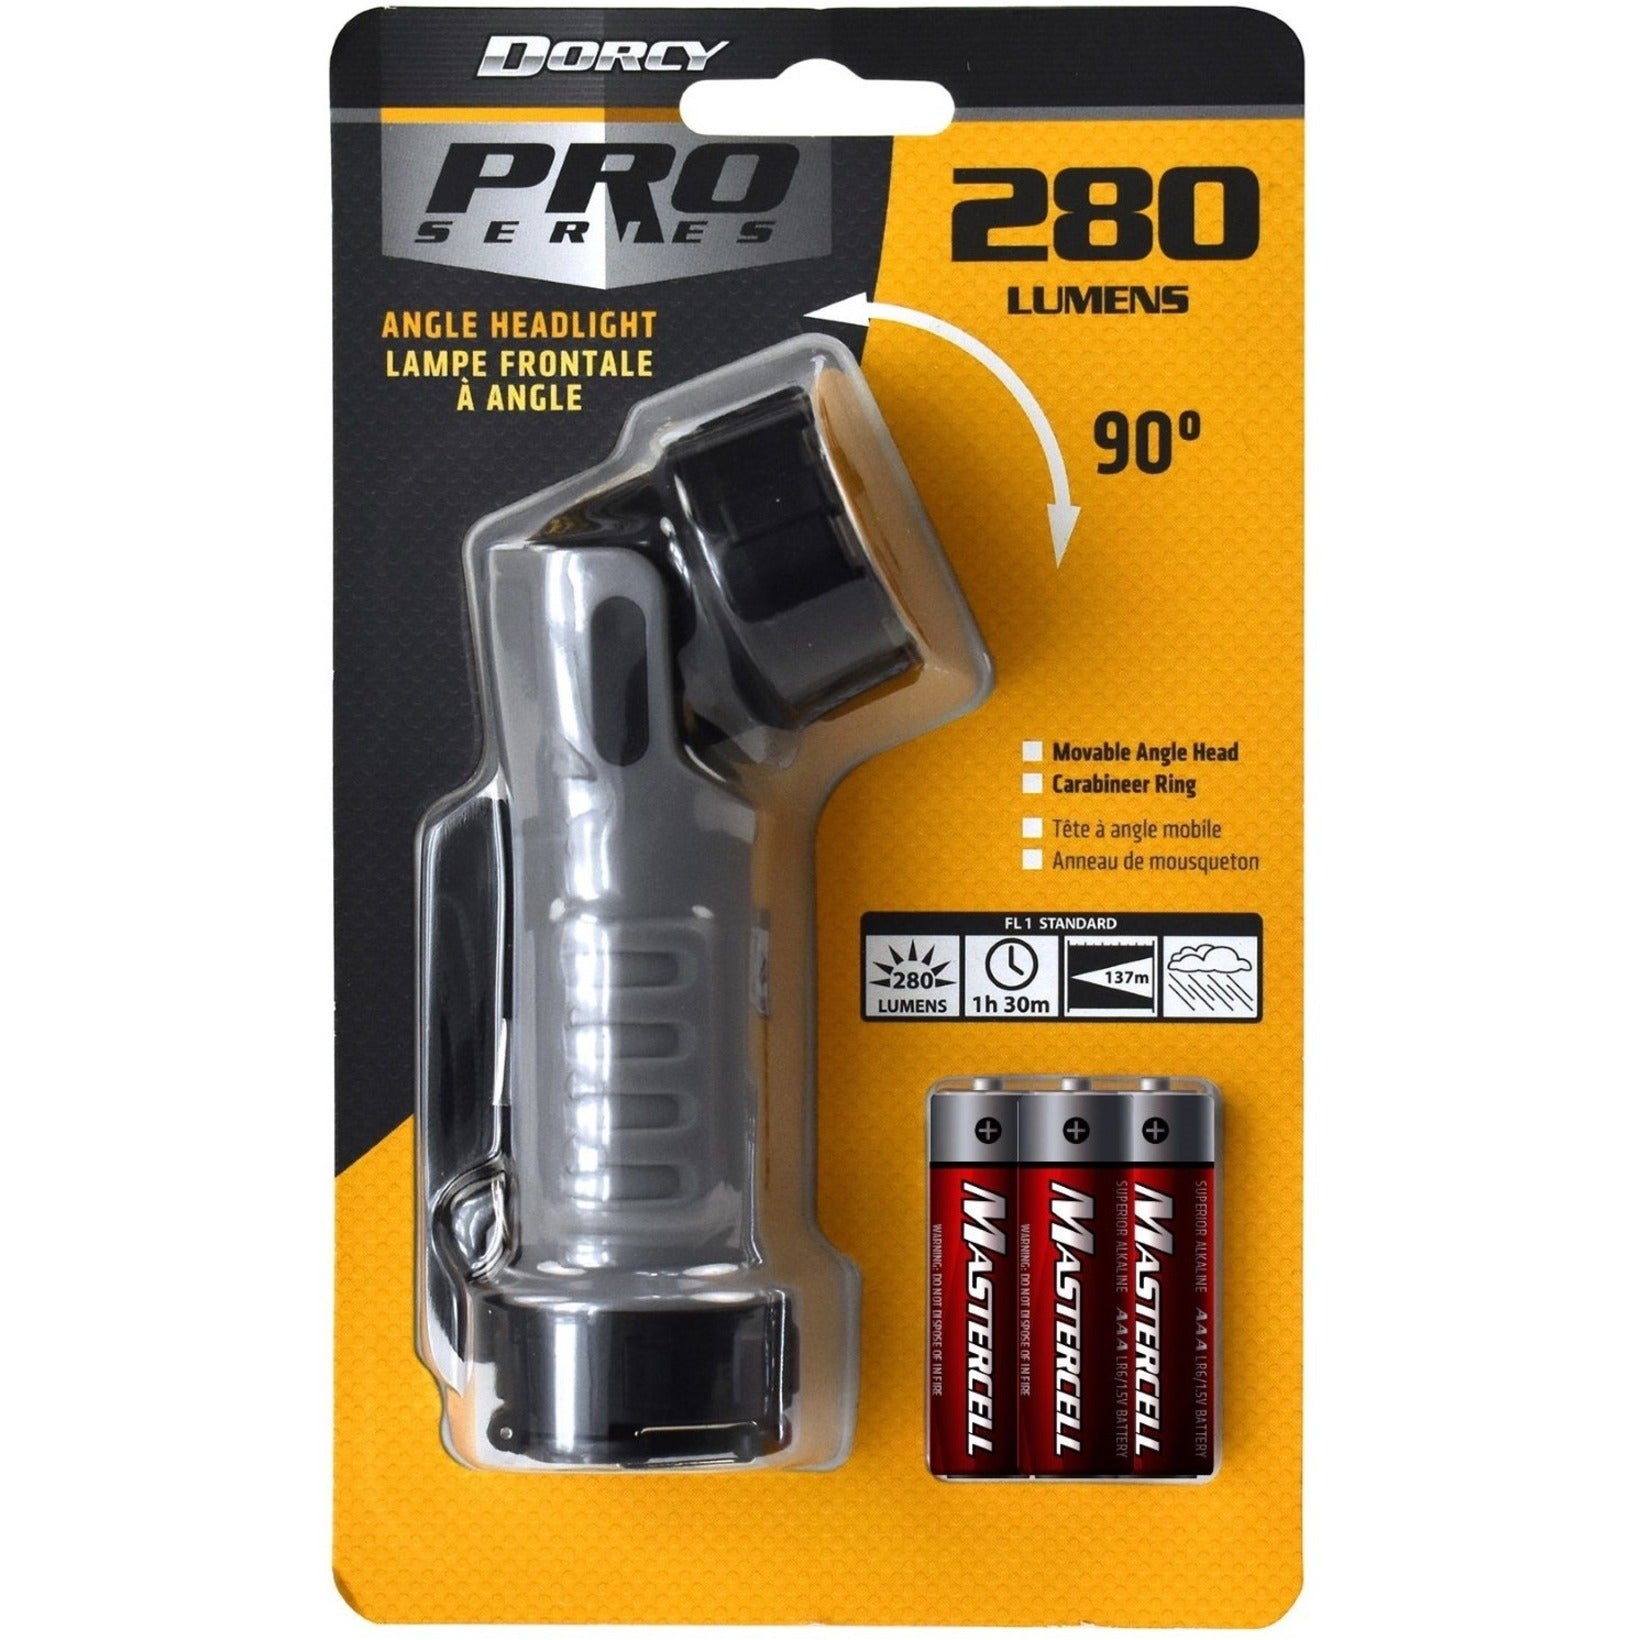 Dorcy 41-2392 PRO Series 280 Lumen Work Light, Water Resistant, Weather Resistant, Battery Powered